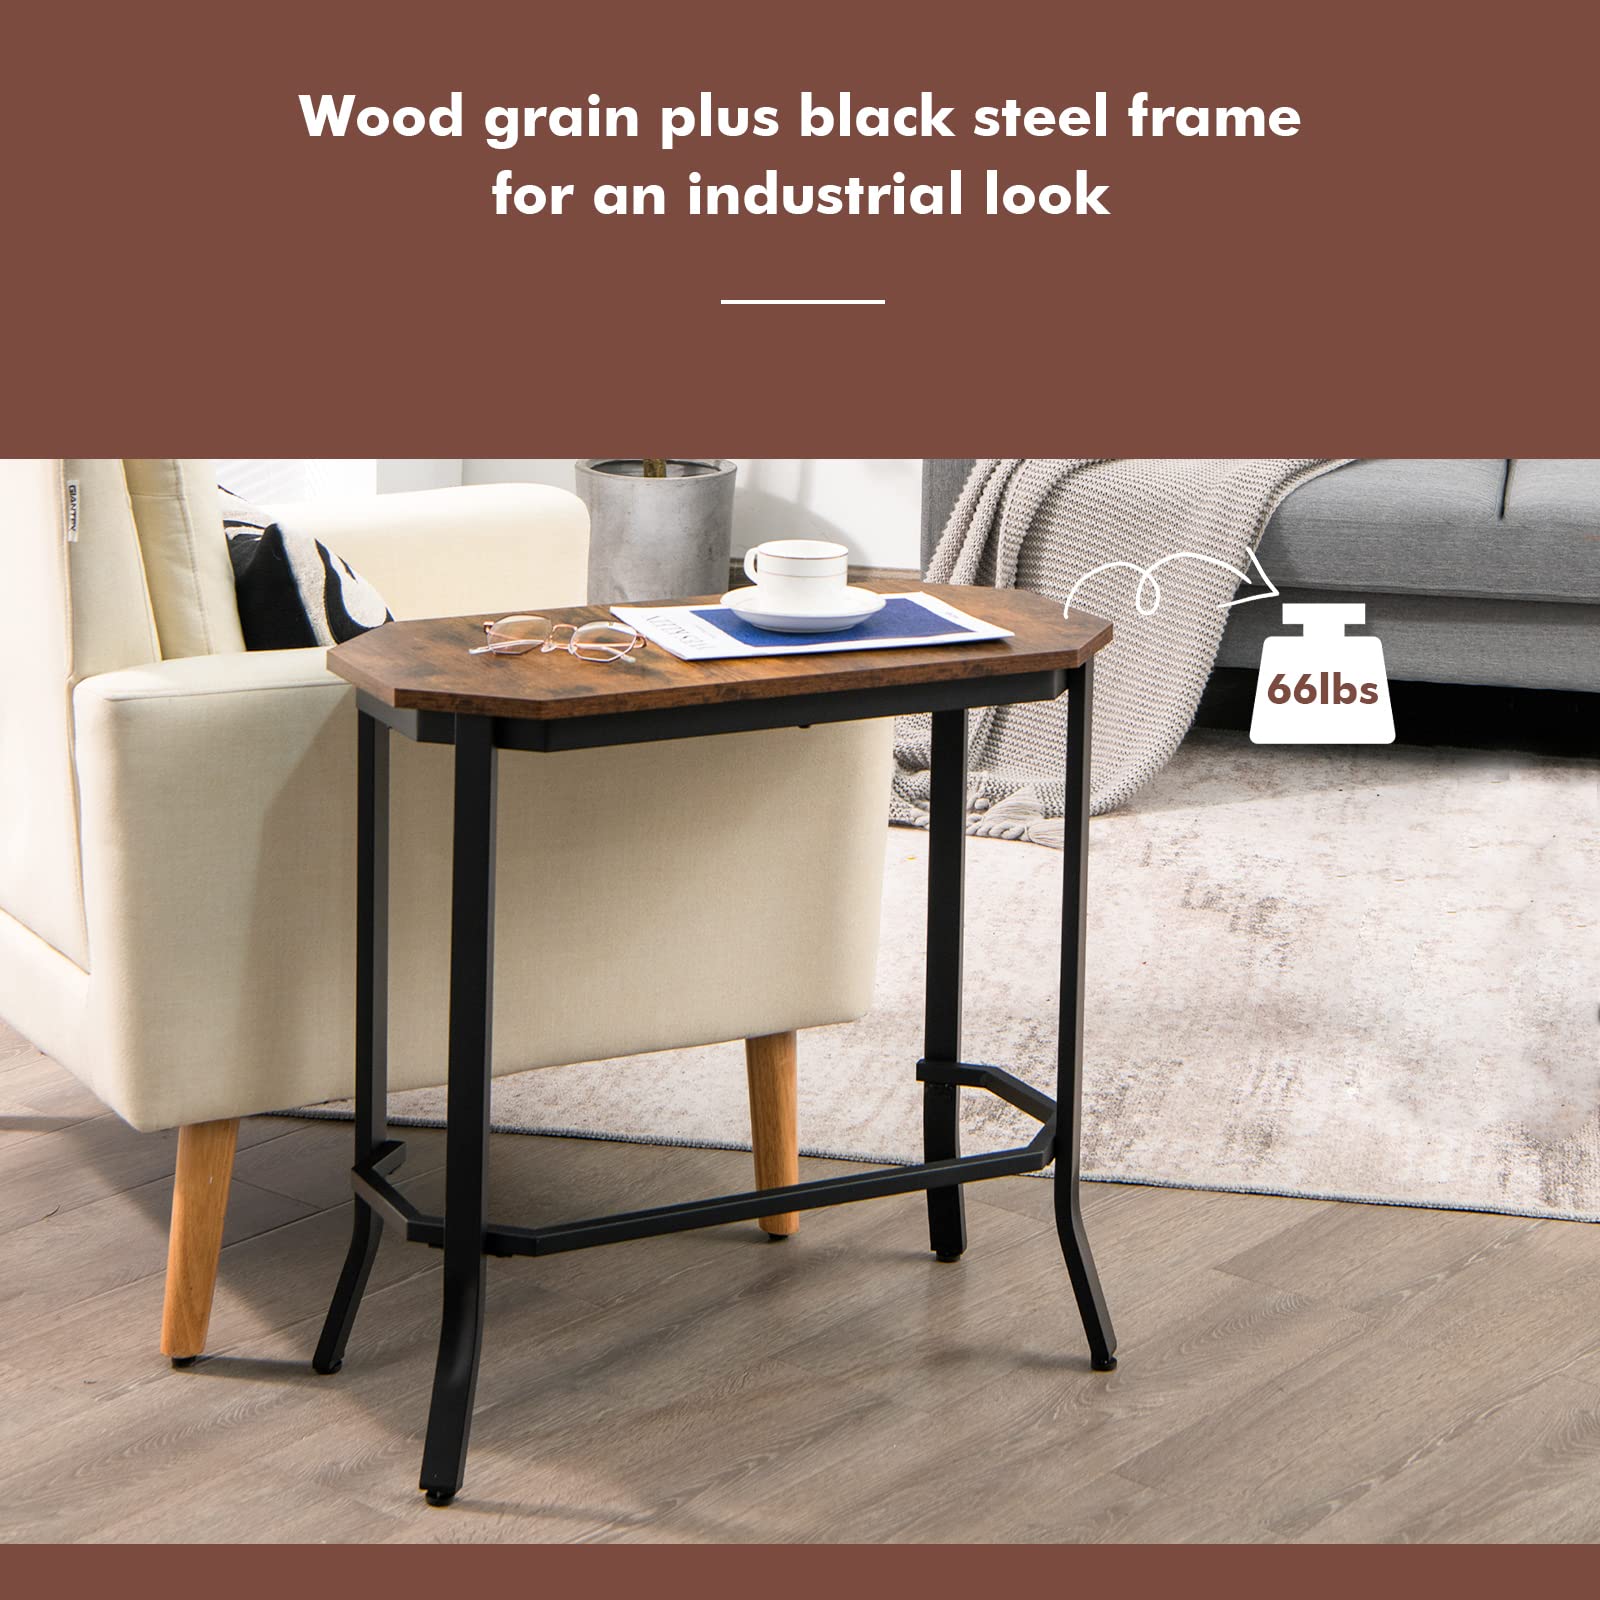 Giantex Narrow End Table w/Rustic Wood Grain & Stable Steel Frame, 25.5"x12.5"x24.5" Rustic Brown